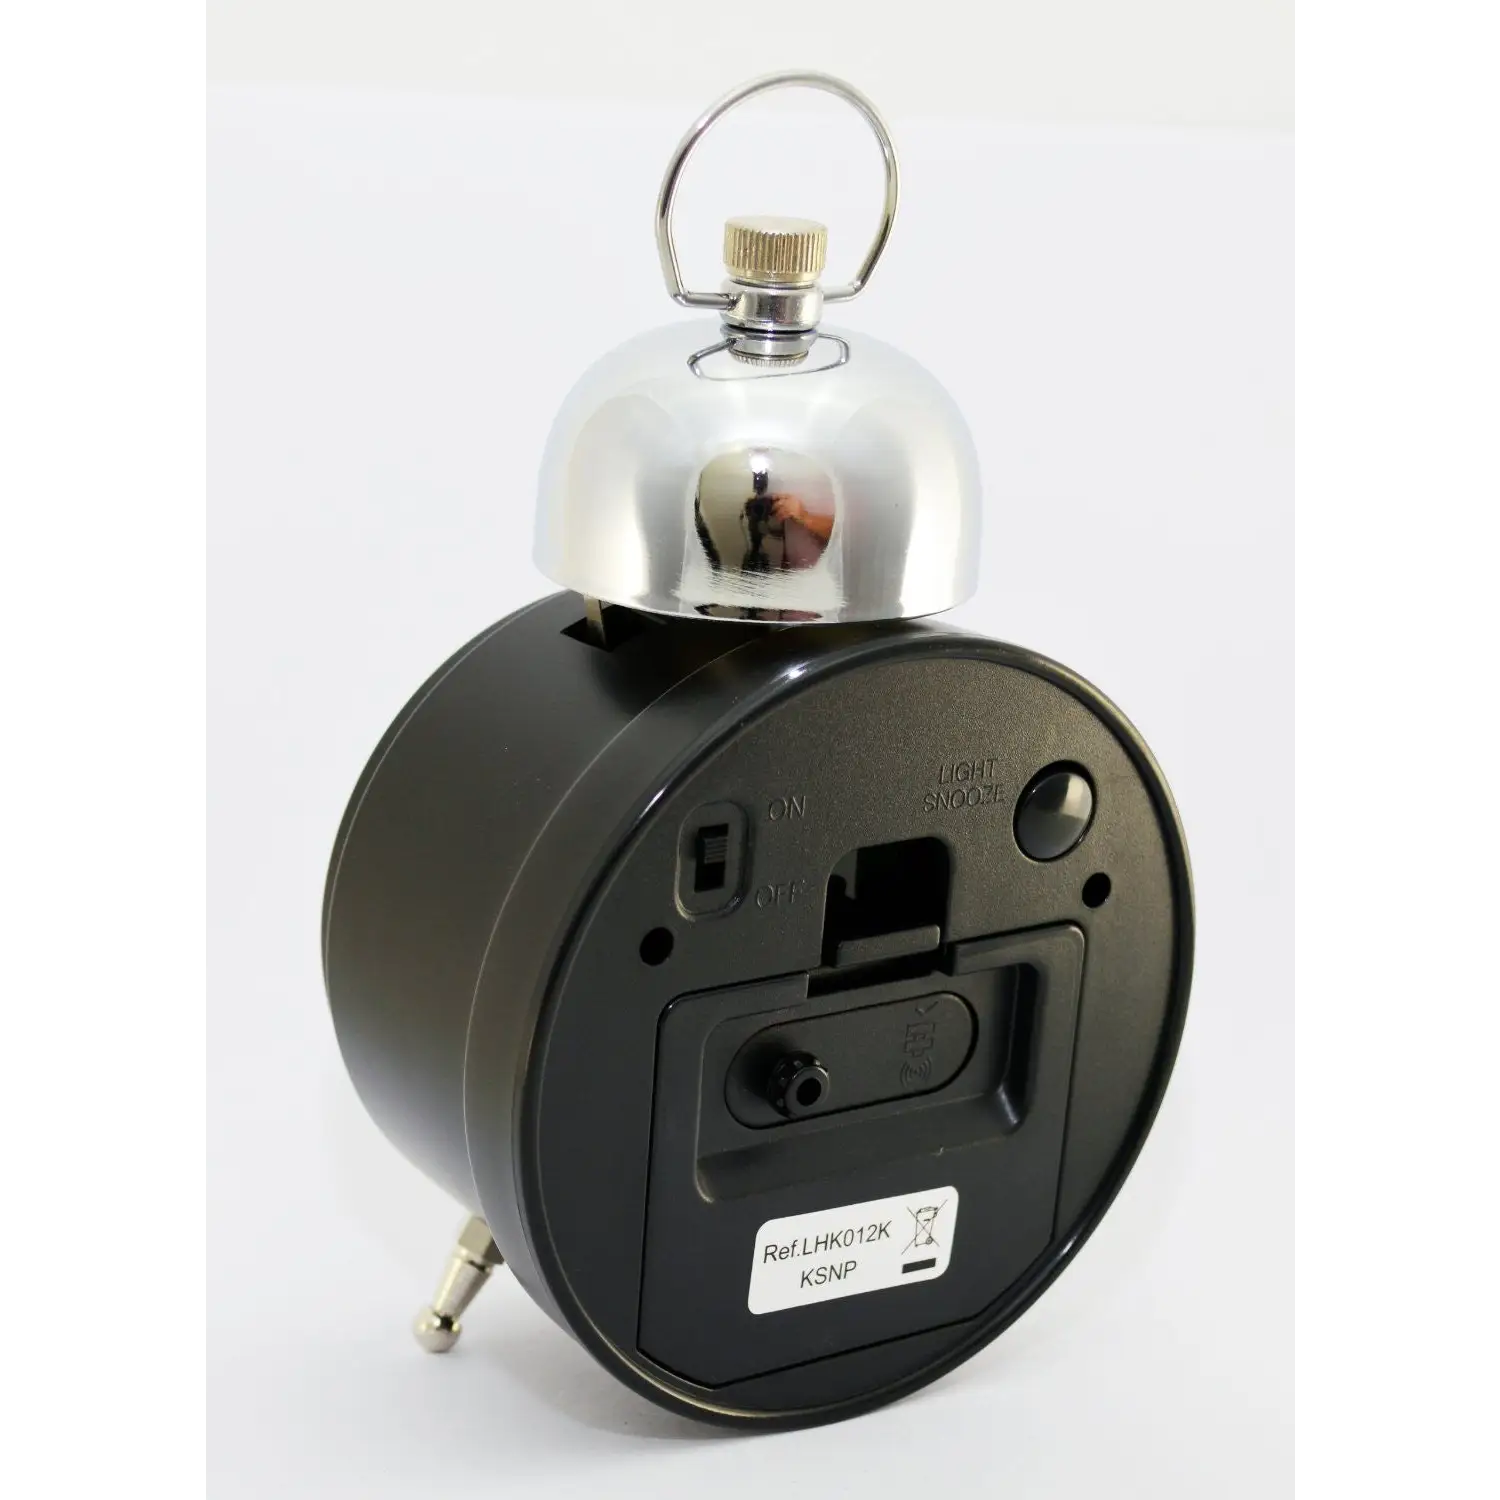 Lorus Black Single Silver Bell Alarm Clock LHK012K - alarm